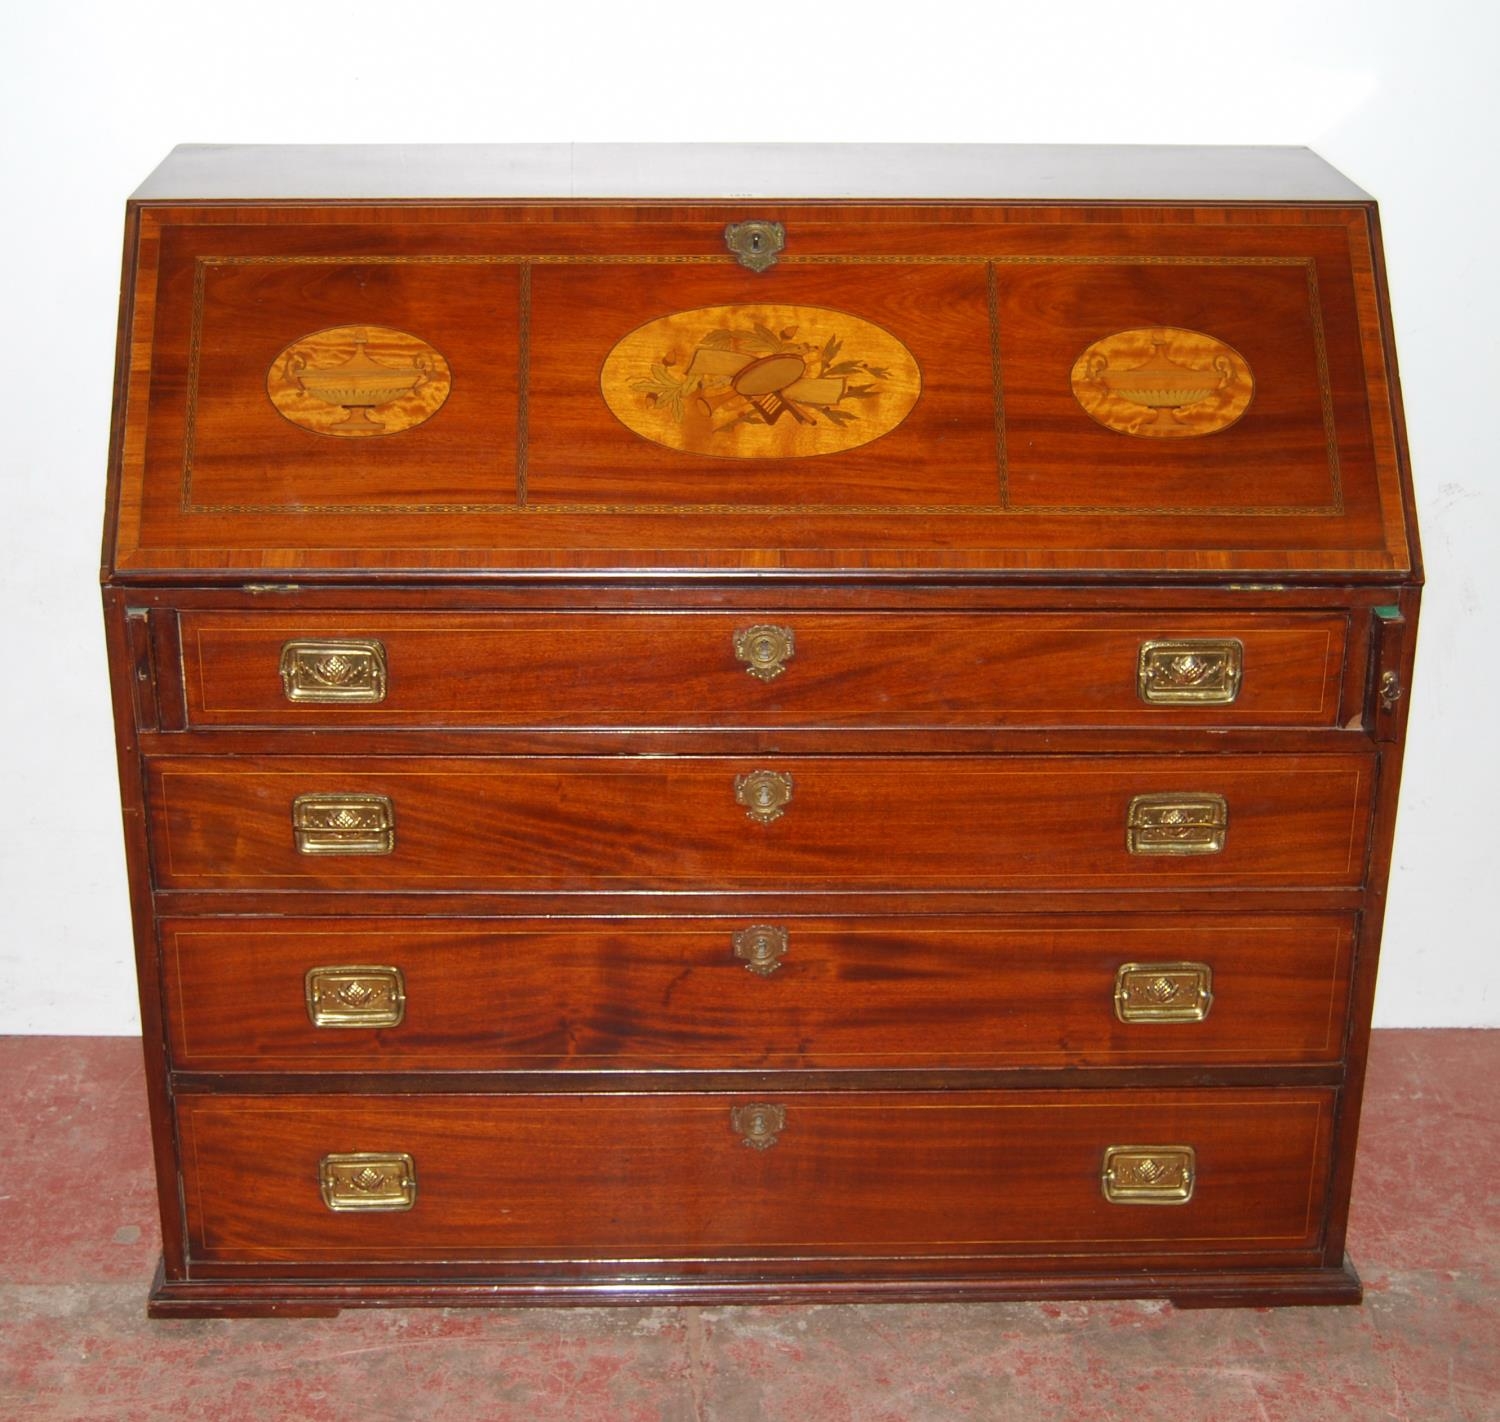 George III style Scottish inlaid mahogany writing bureau, the fall front with three satinwood,